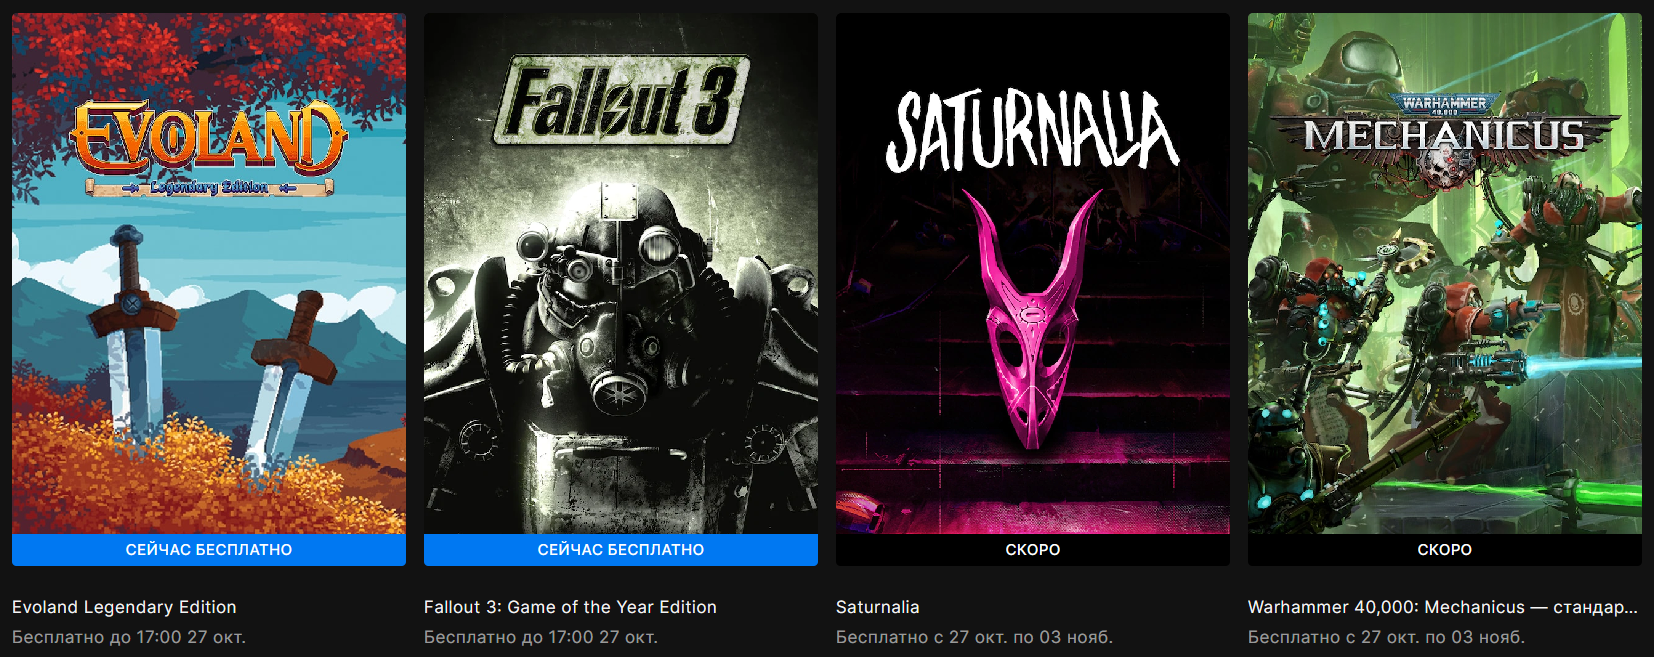 Epic games сейчас. Fallout Epic games. Эволенд 3. Игра Evoland. Fallout 3 полное издание с дополнениями.